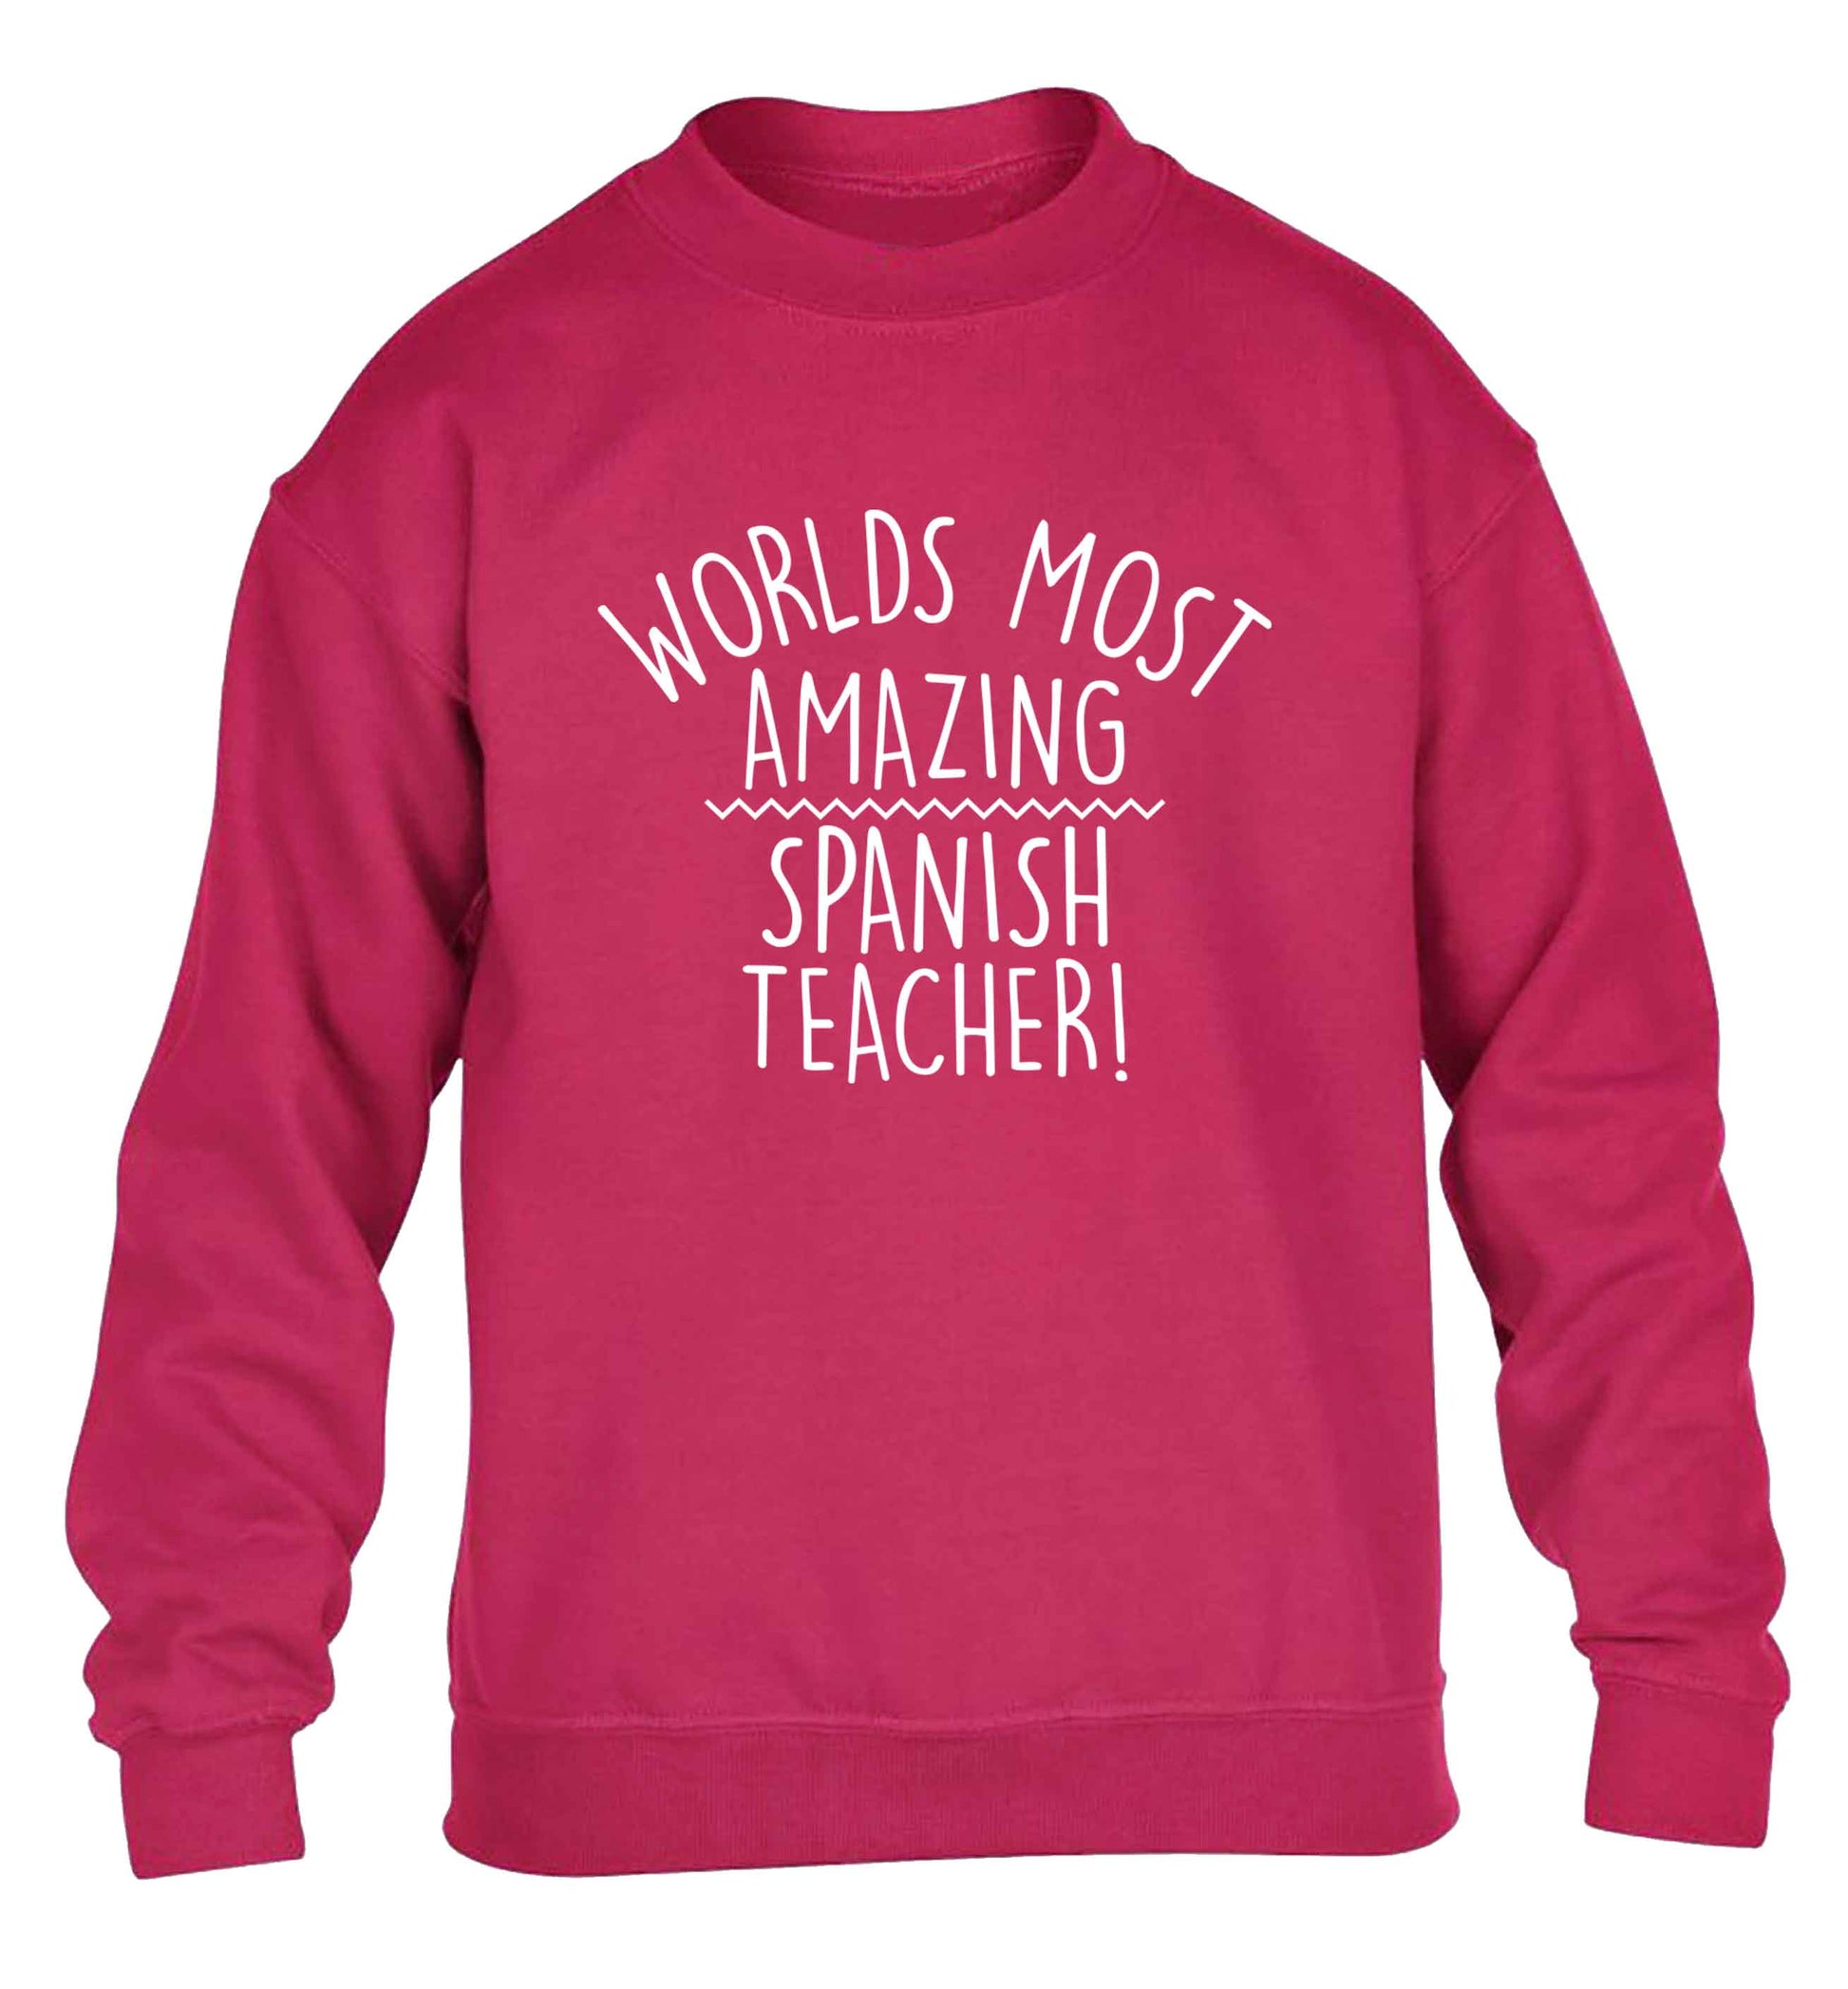 Worlds most amazing Spanish teacher children's pink sweater 12-13 Years